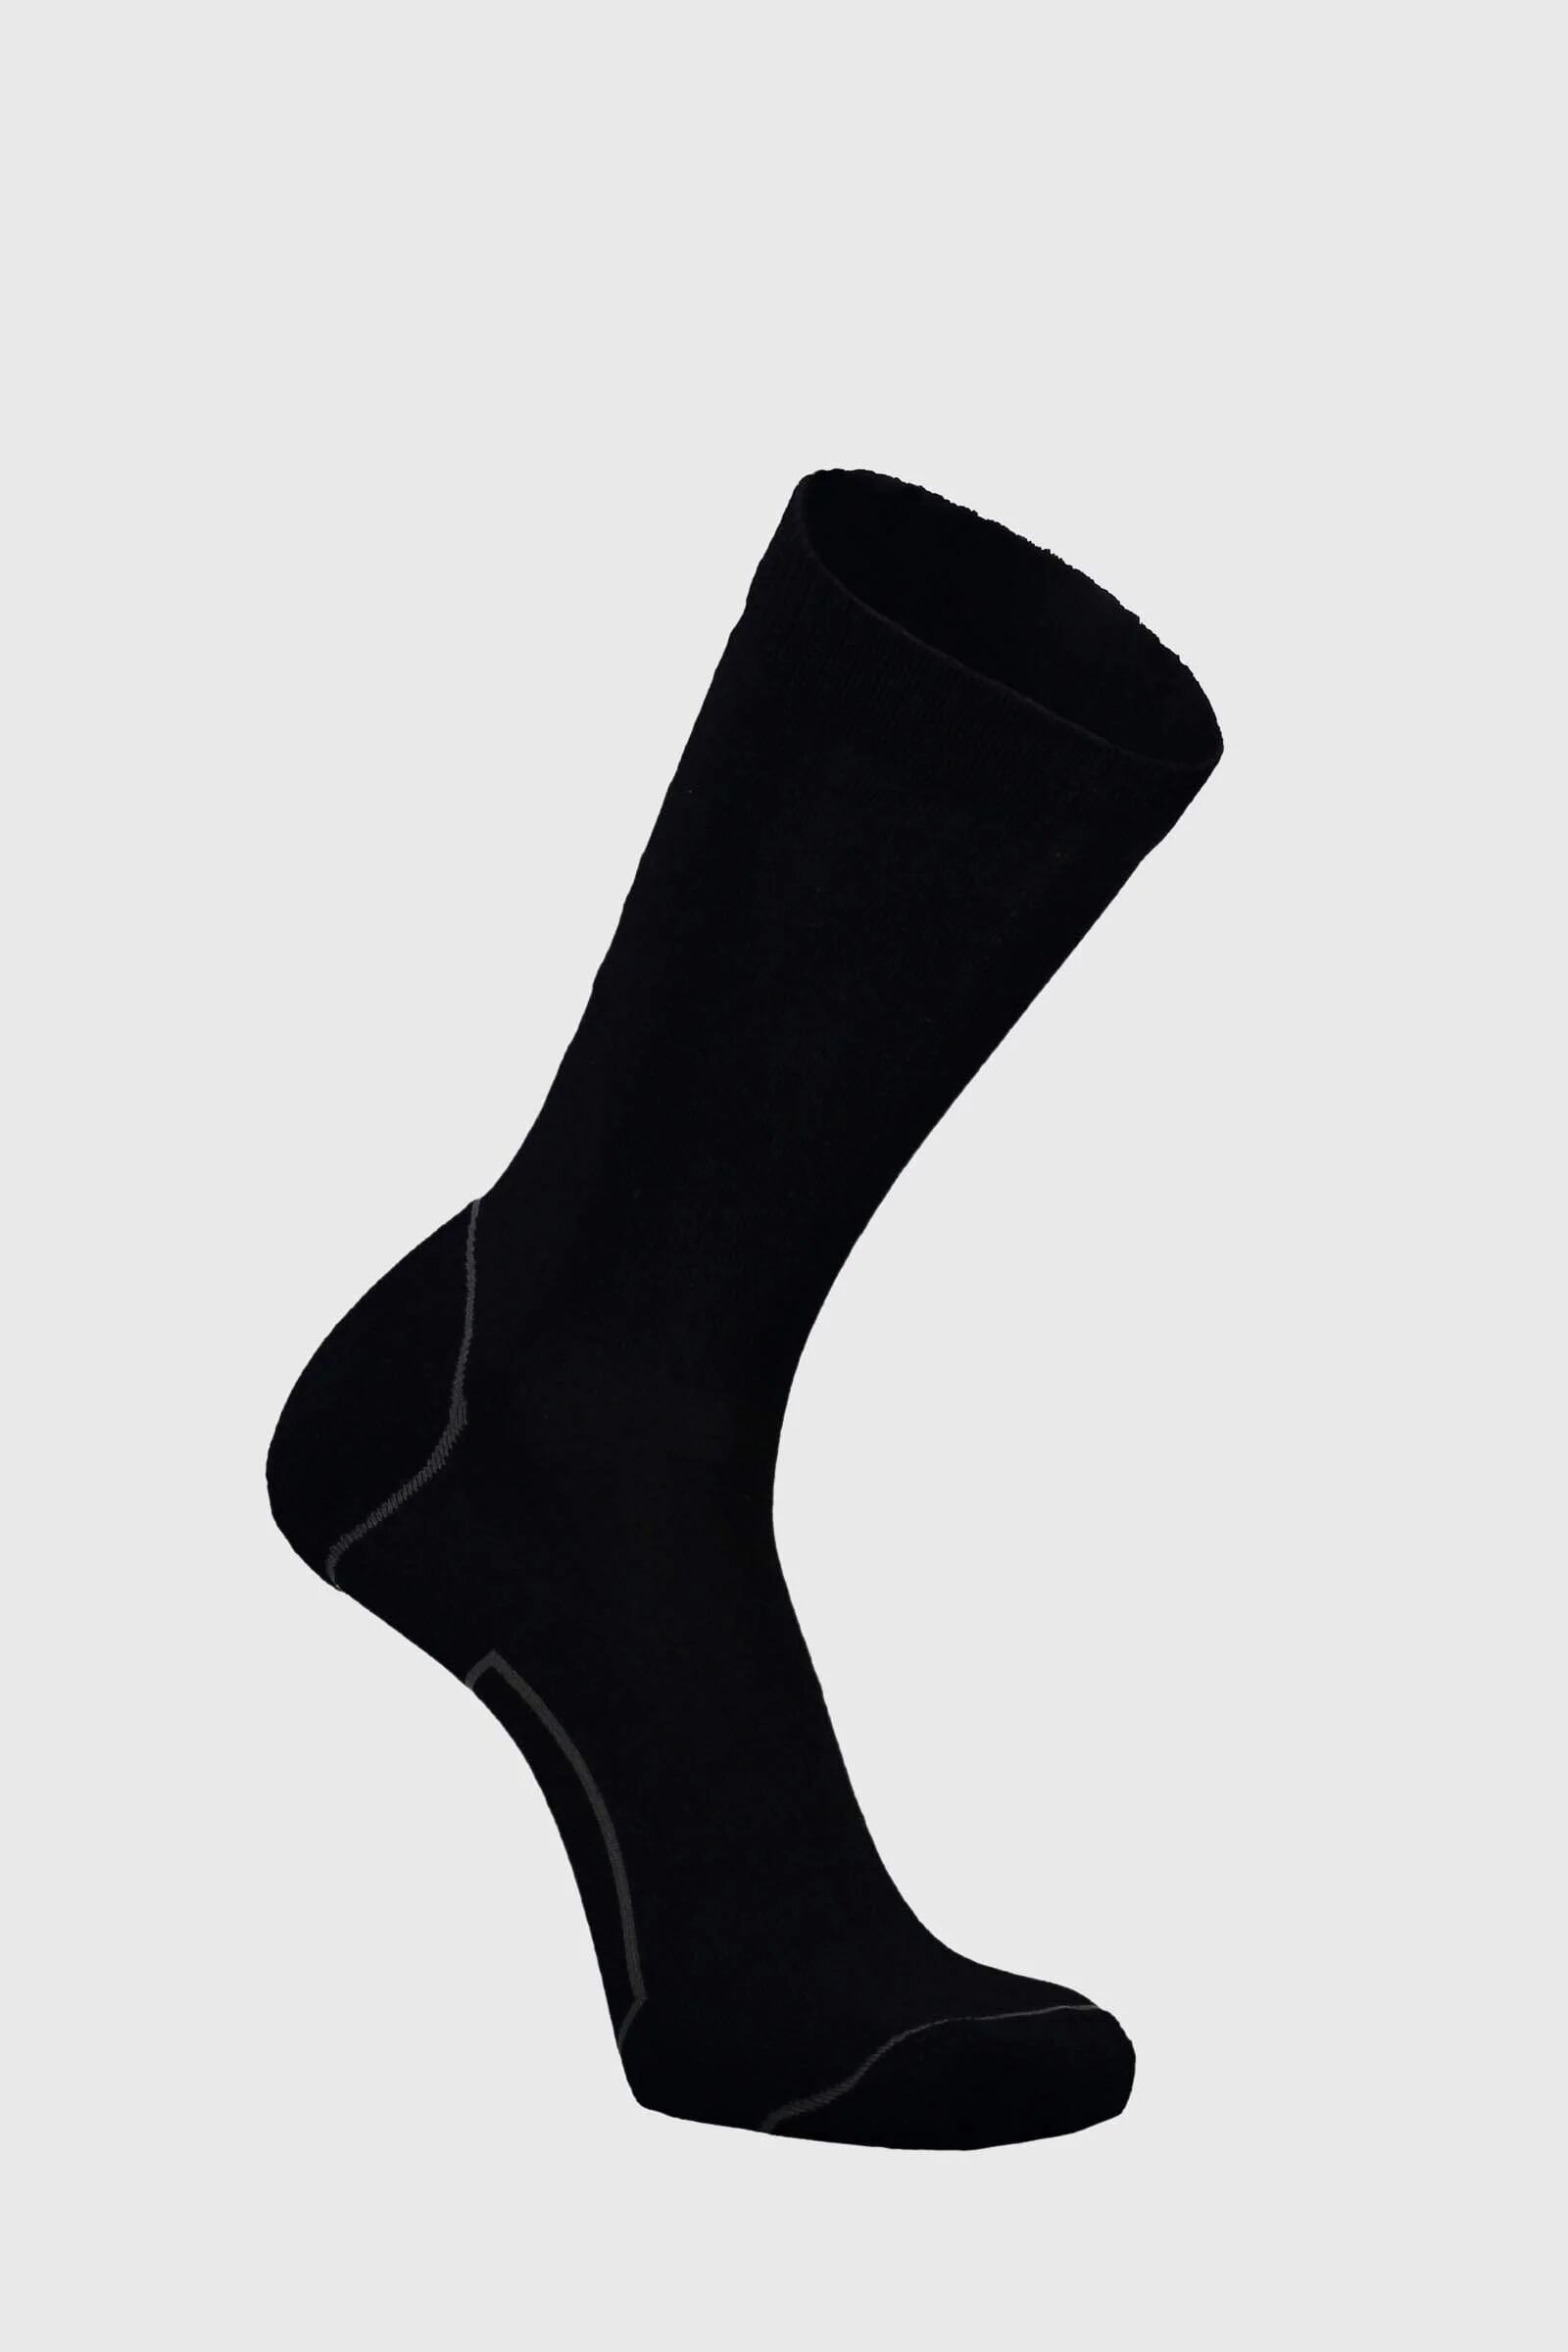 Mons Royale Unisex Tech Bike Sock 2.0 - Merino Wool, Black / 39-41